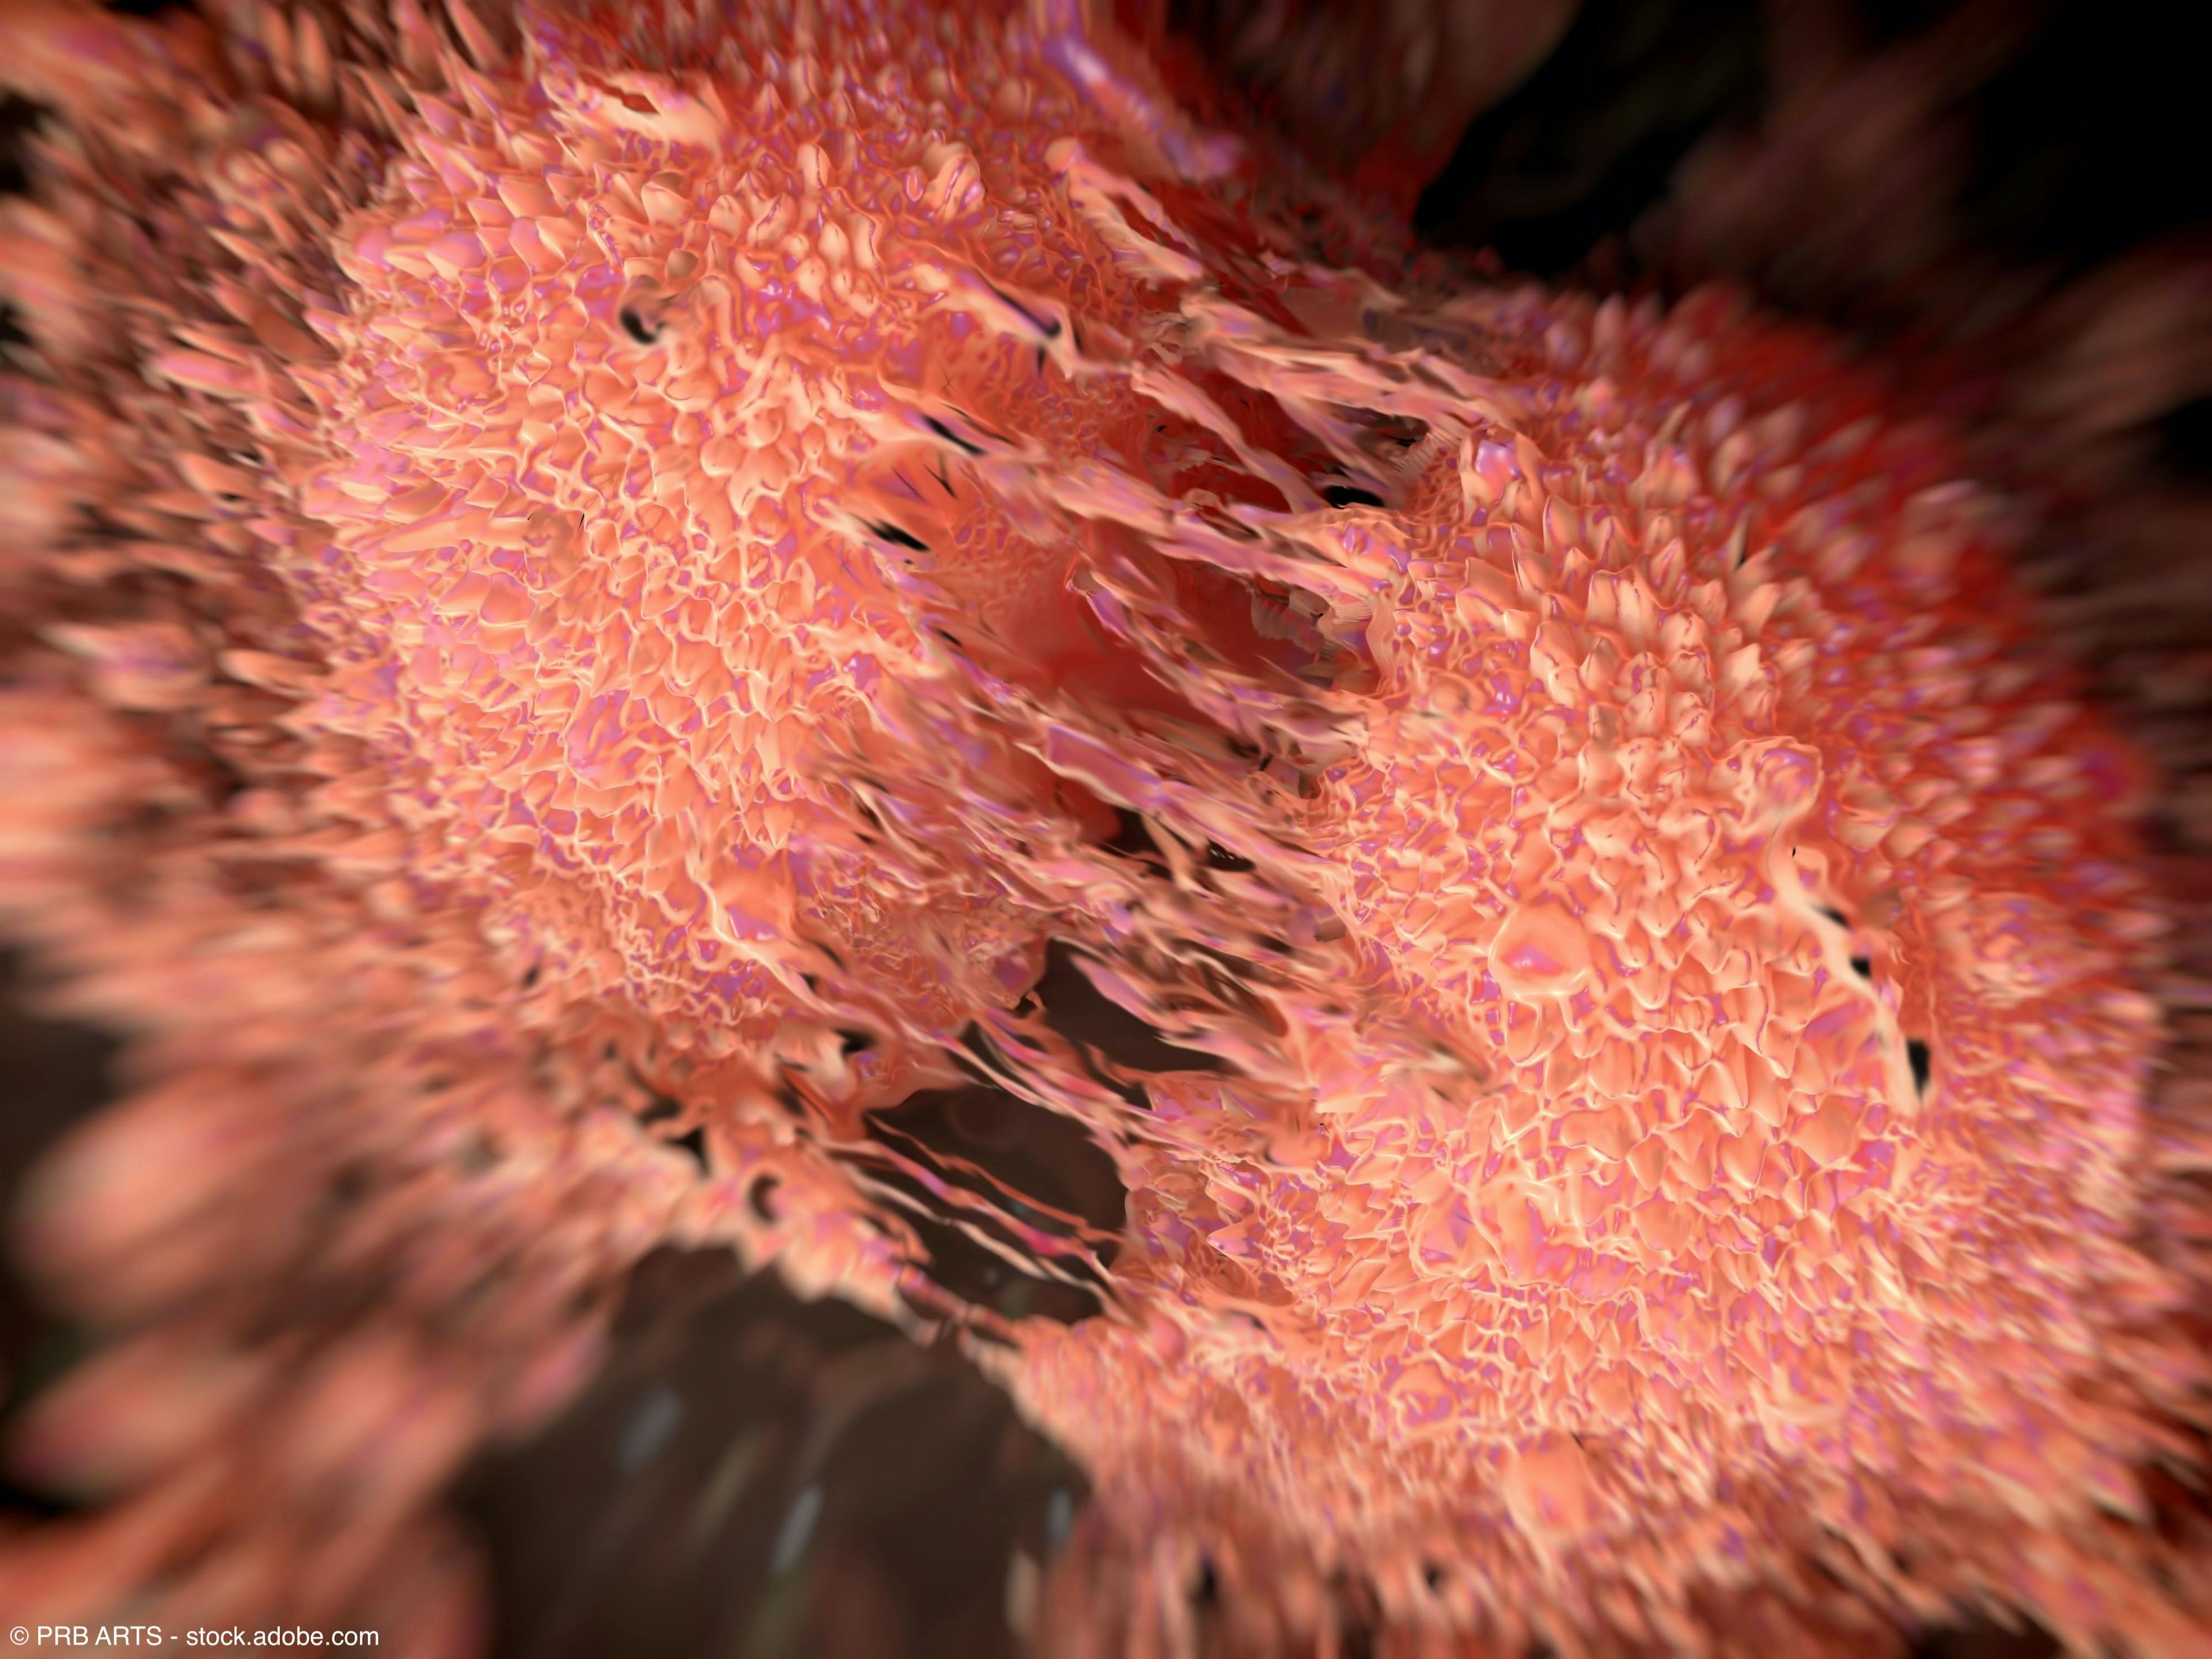 Division of prostate cancer cells | Image Credit: © PRB ARTS - stock.adobe.com